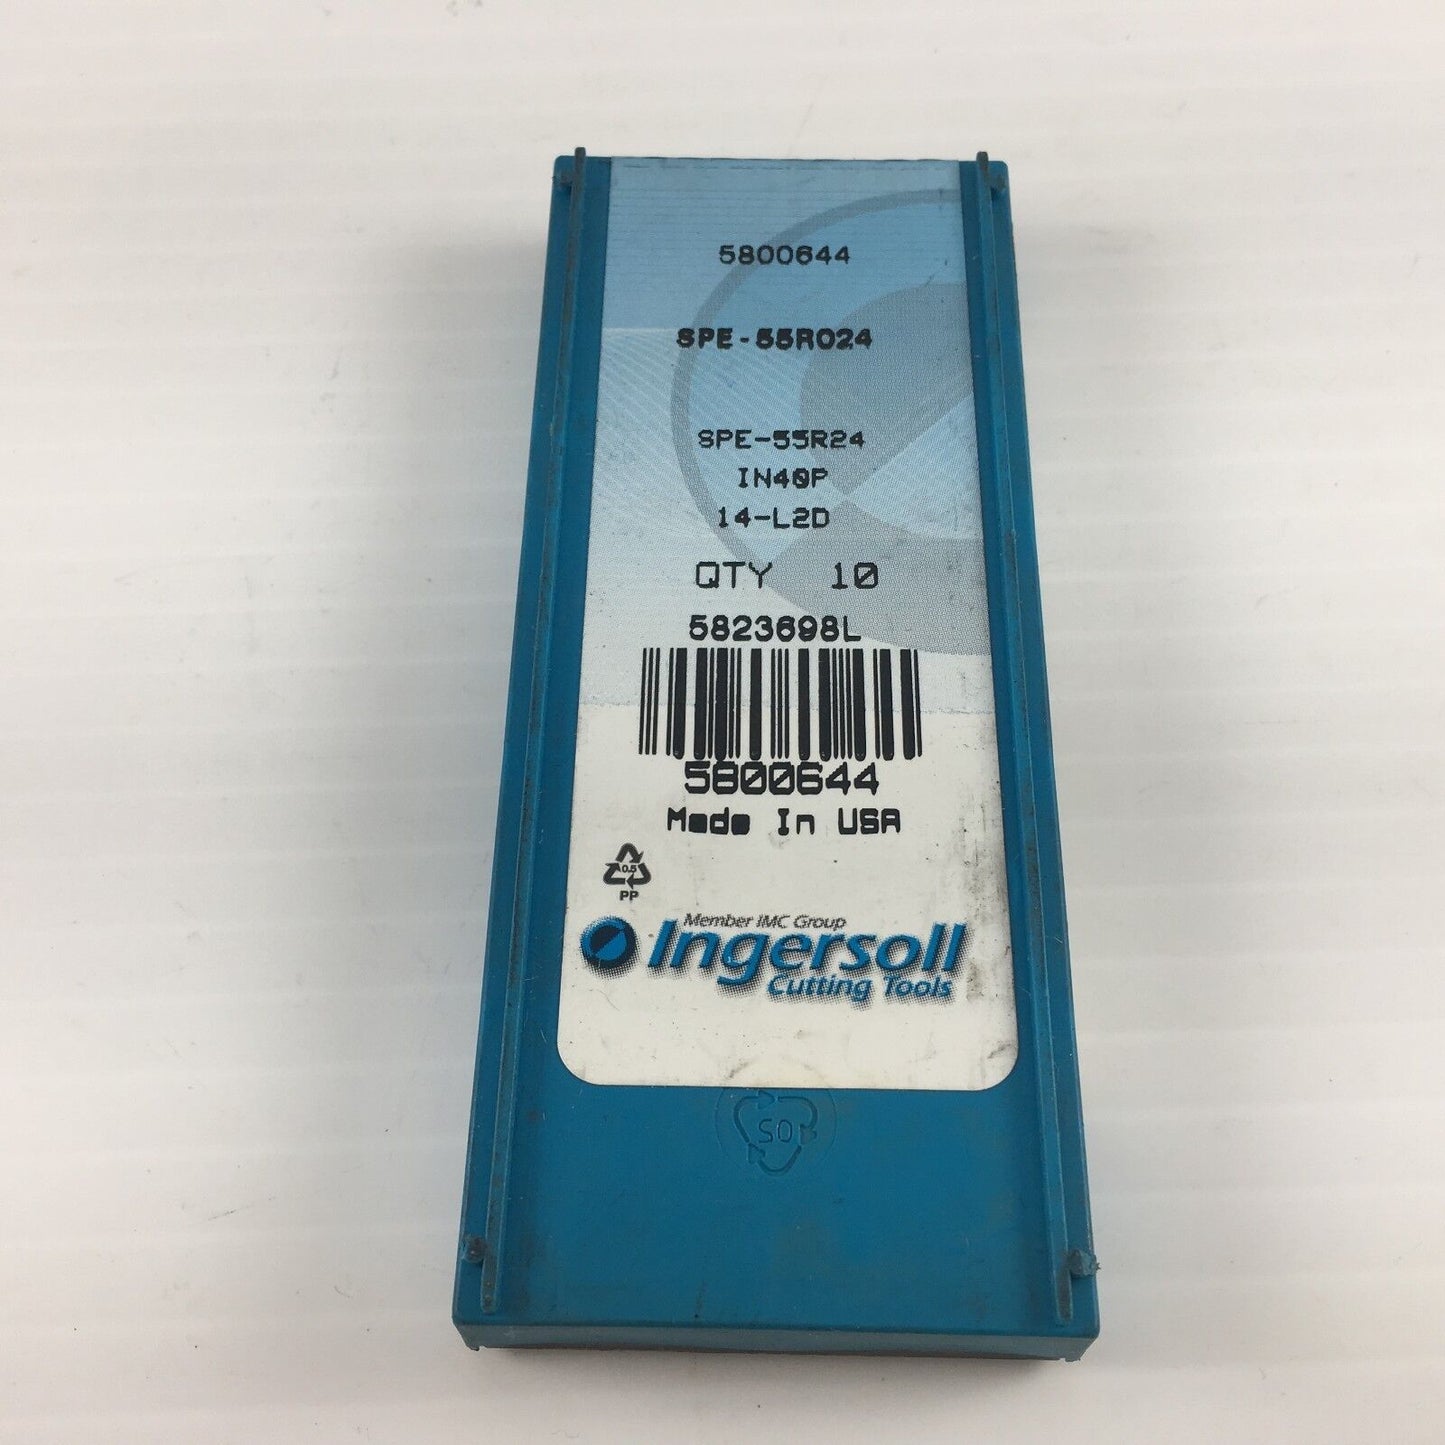 Ingersoll SPE-55R024, Grade IN40P, Inserts (10 pcs)